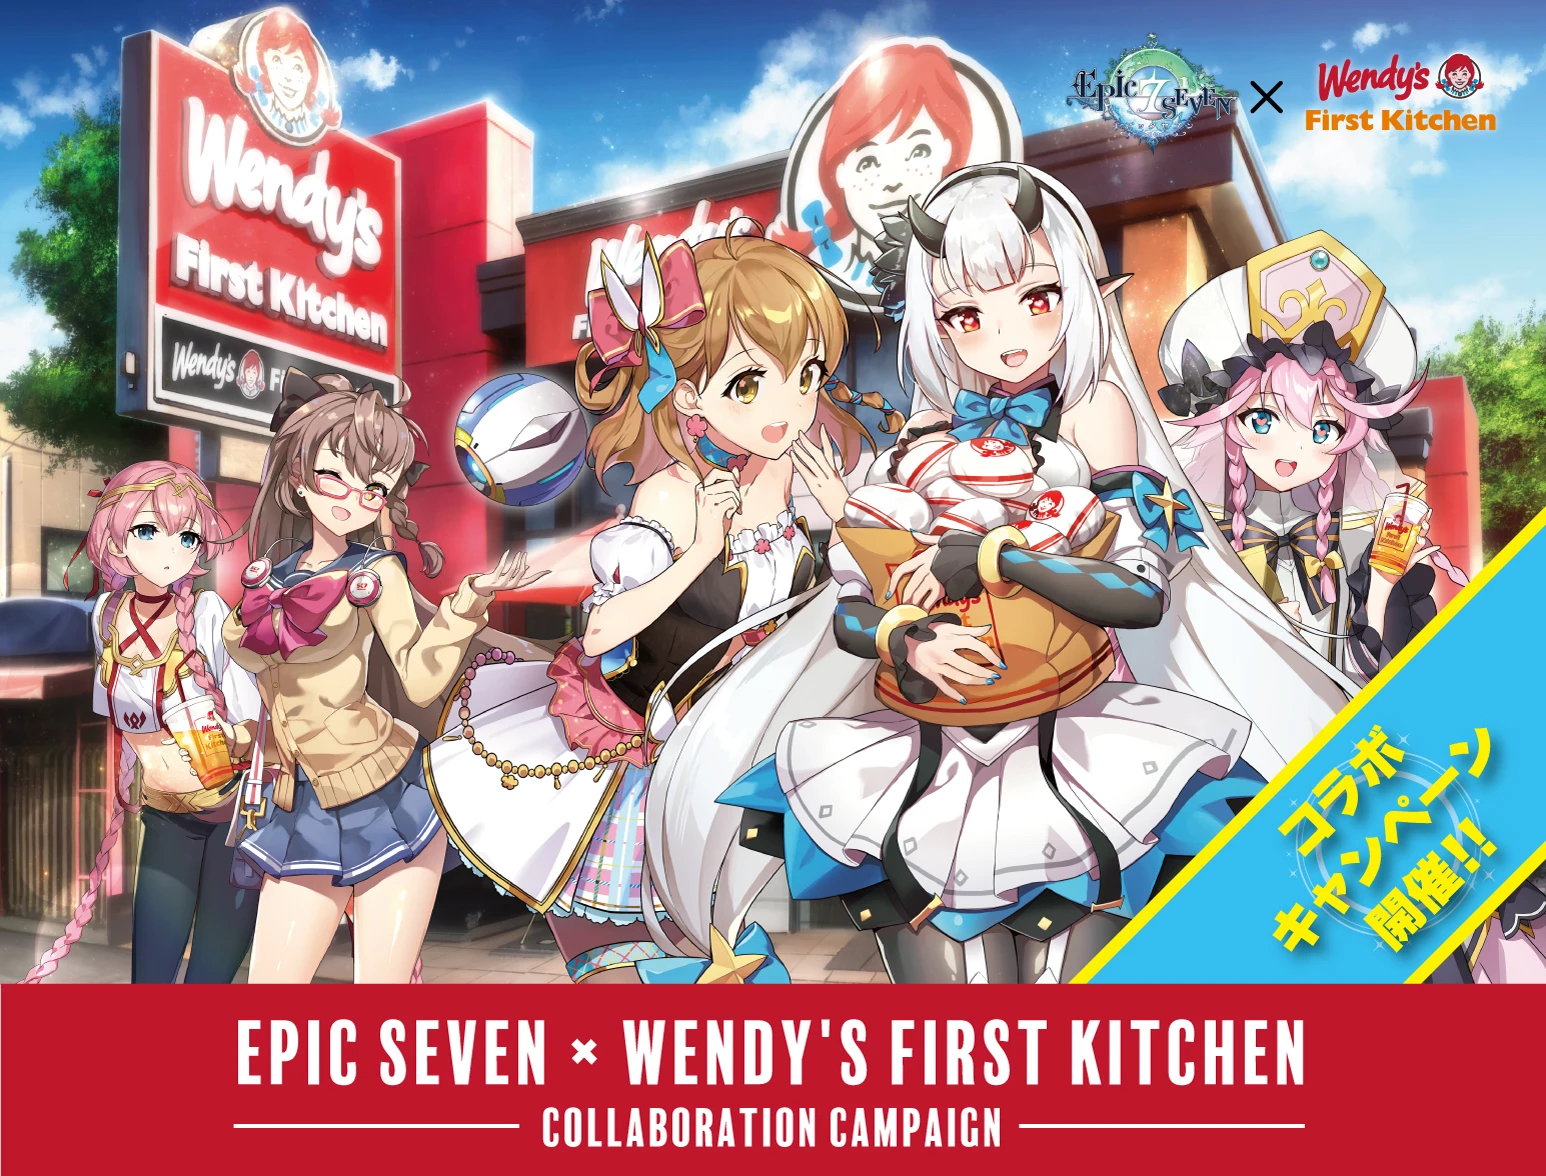 Epic Seven ウェンディーズ ファーストキッチン とのコラボキャンペーンを開催 コラボメニューや限定グッズを販売 Game Watch